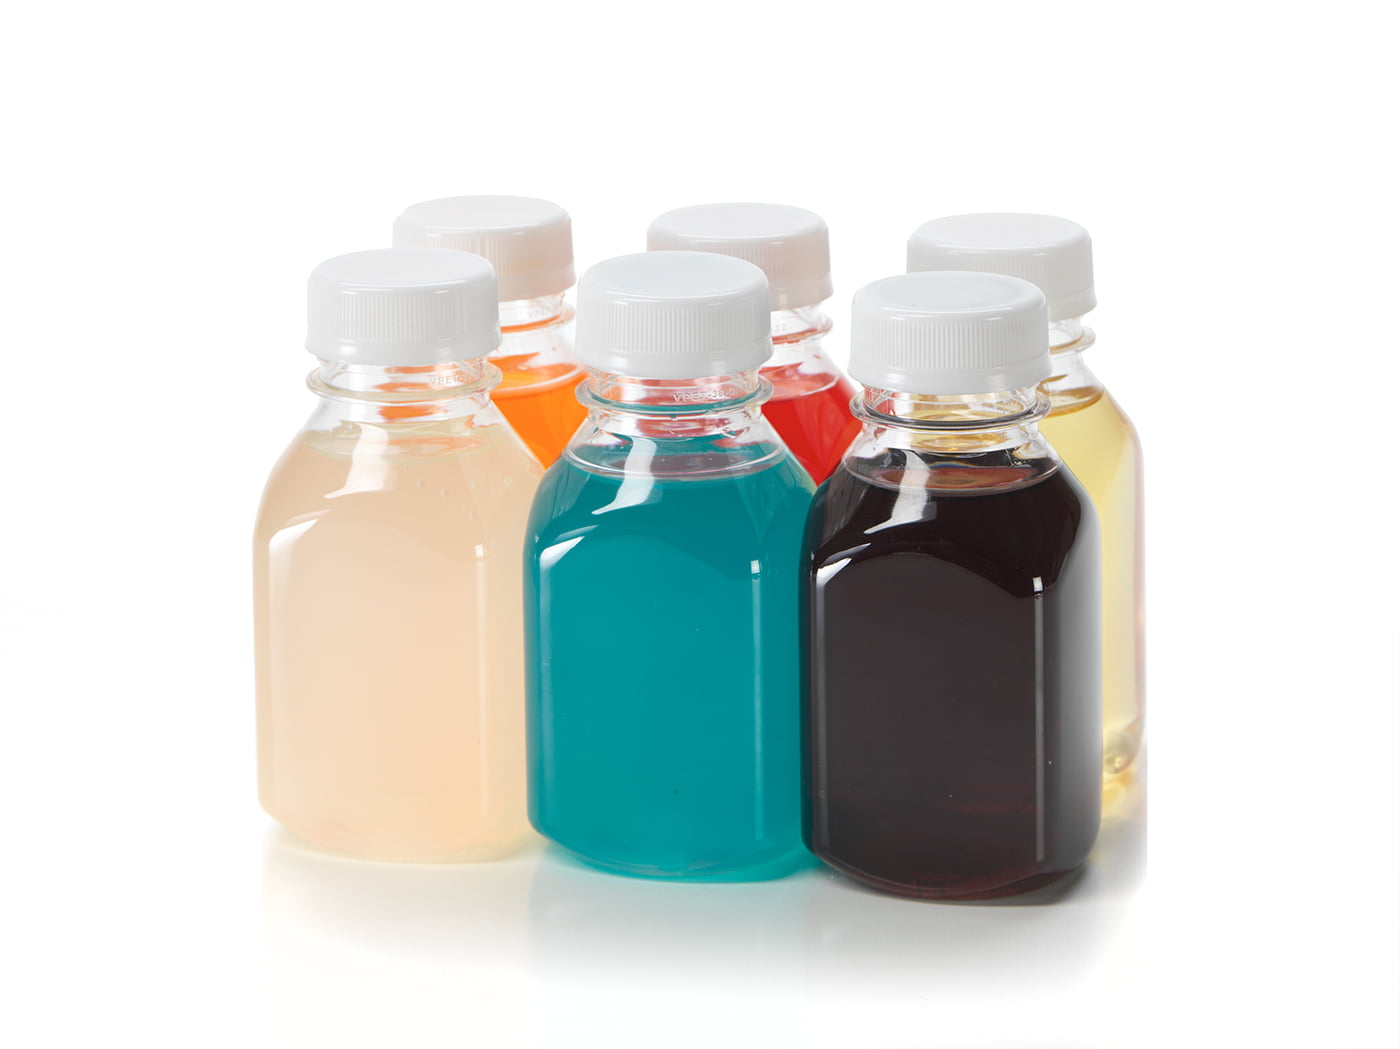 Juice Bottles – Set of 6 HDPE Plastic Juice Bottles with